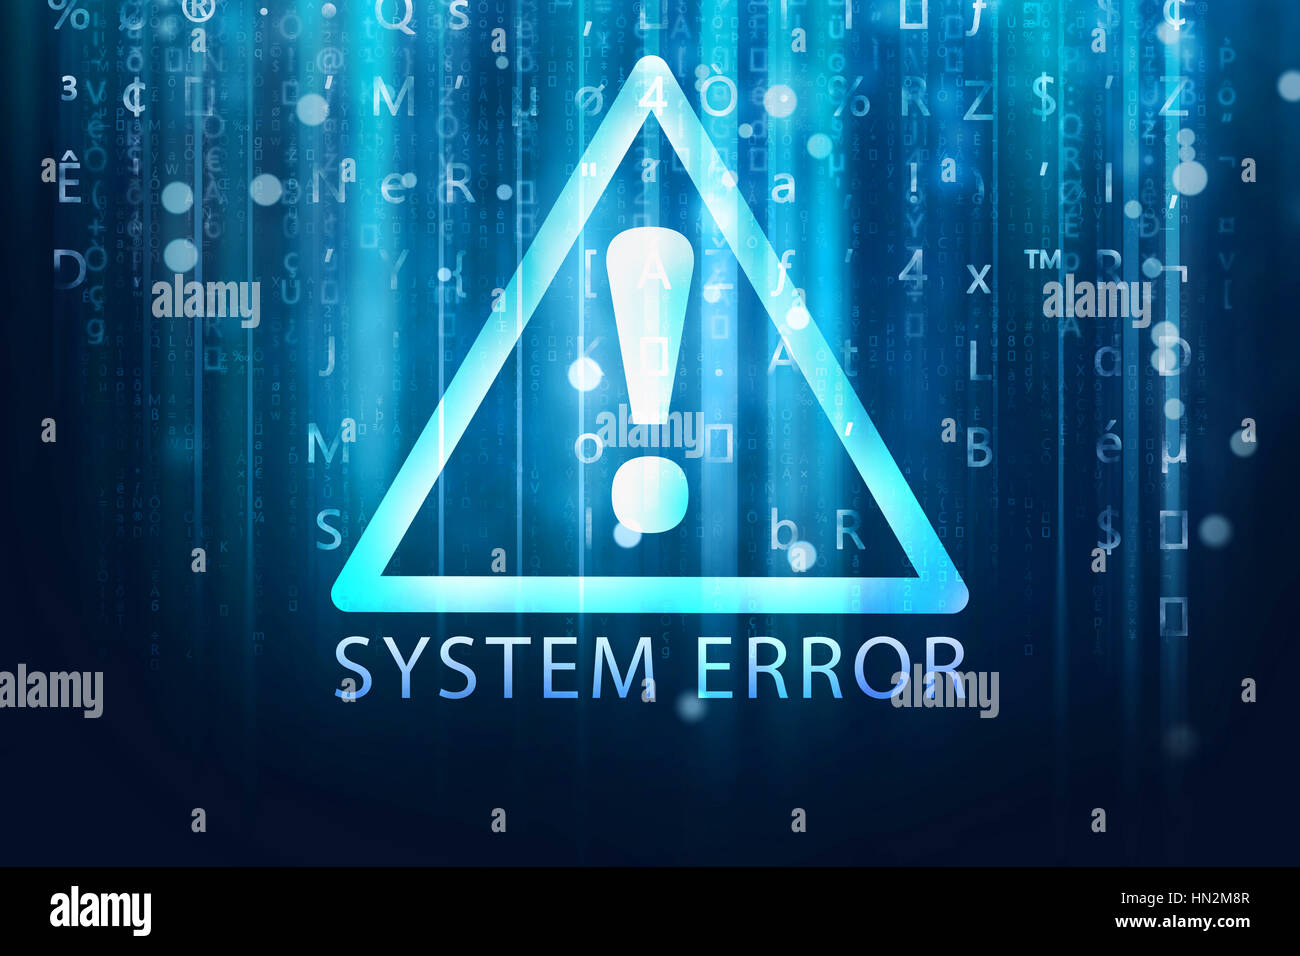 system error background Stock Photo